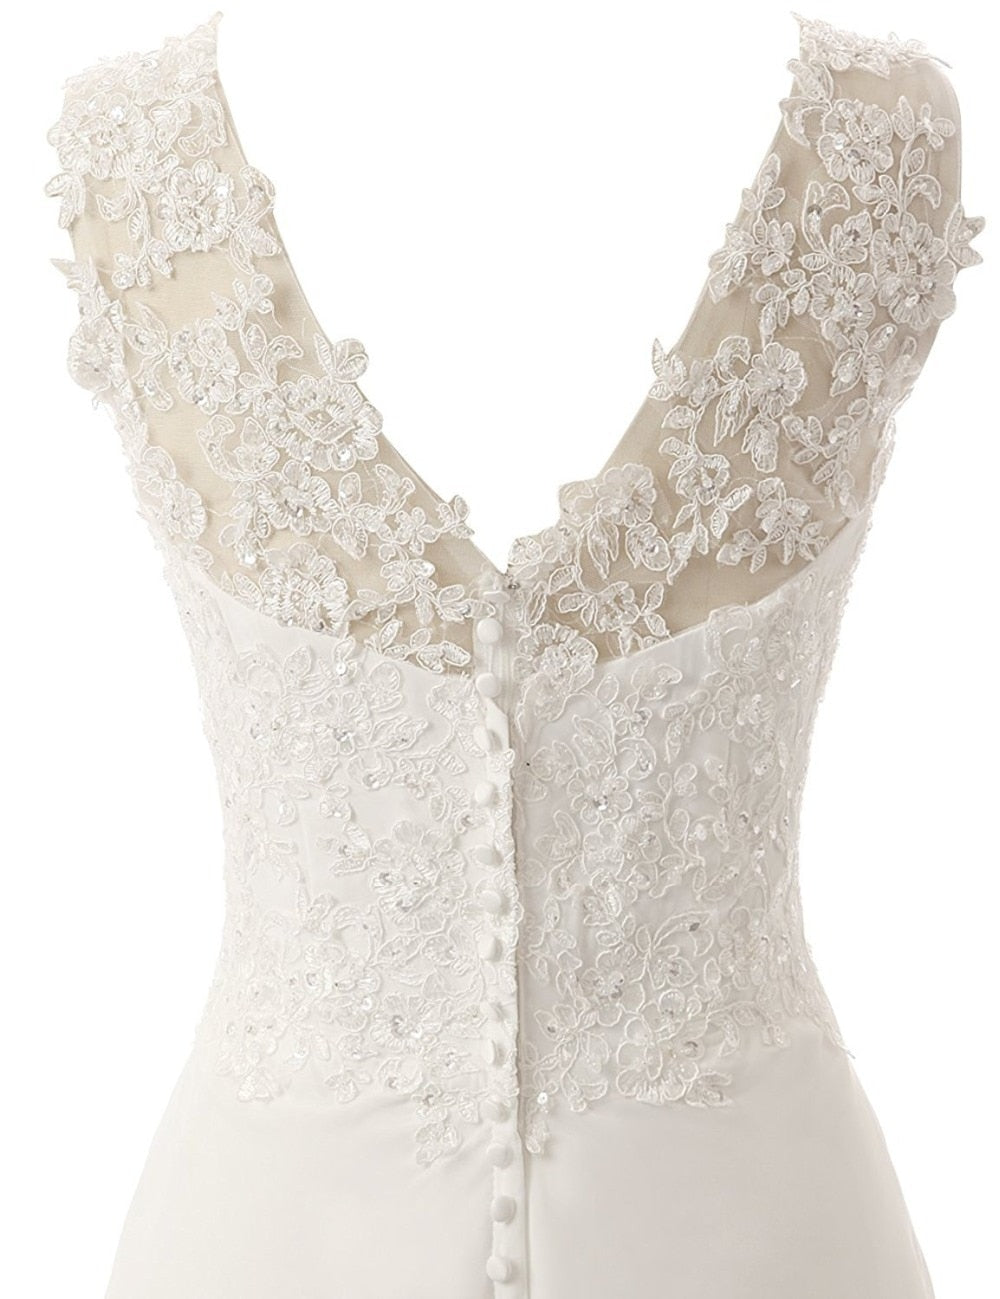 Beach Wedding Dresses White/Lvory Chiffon Lace Appliques Bridal Gown Backless Vestido De Noiva